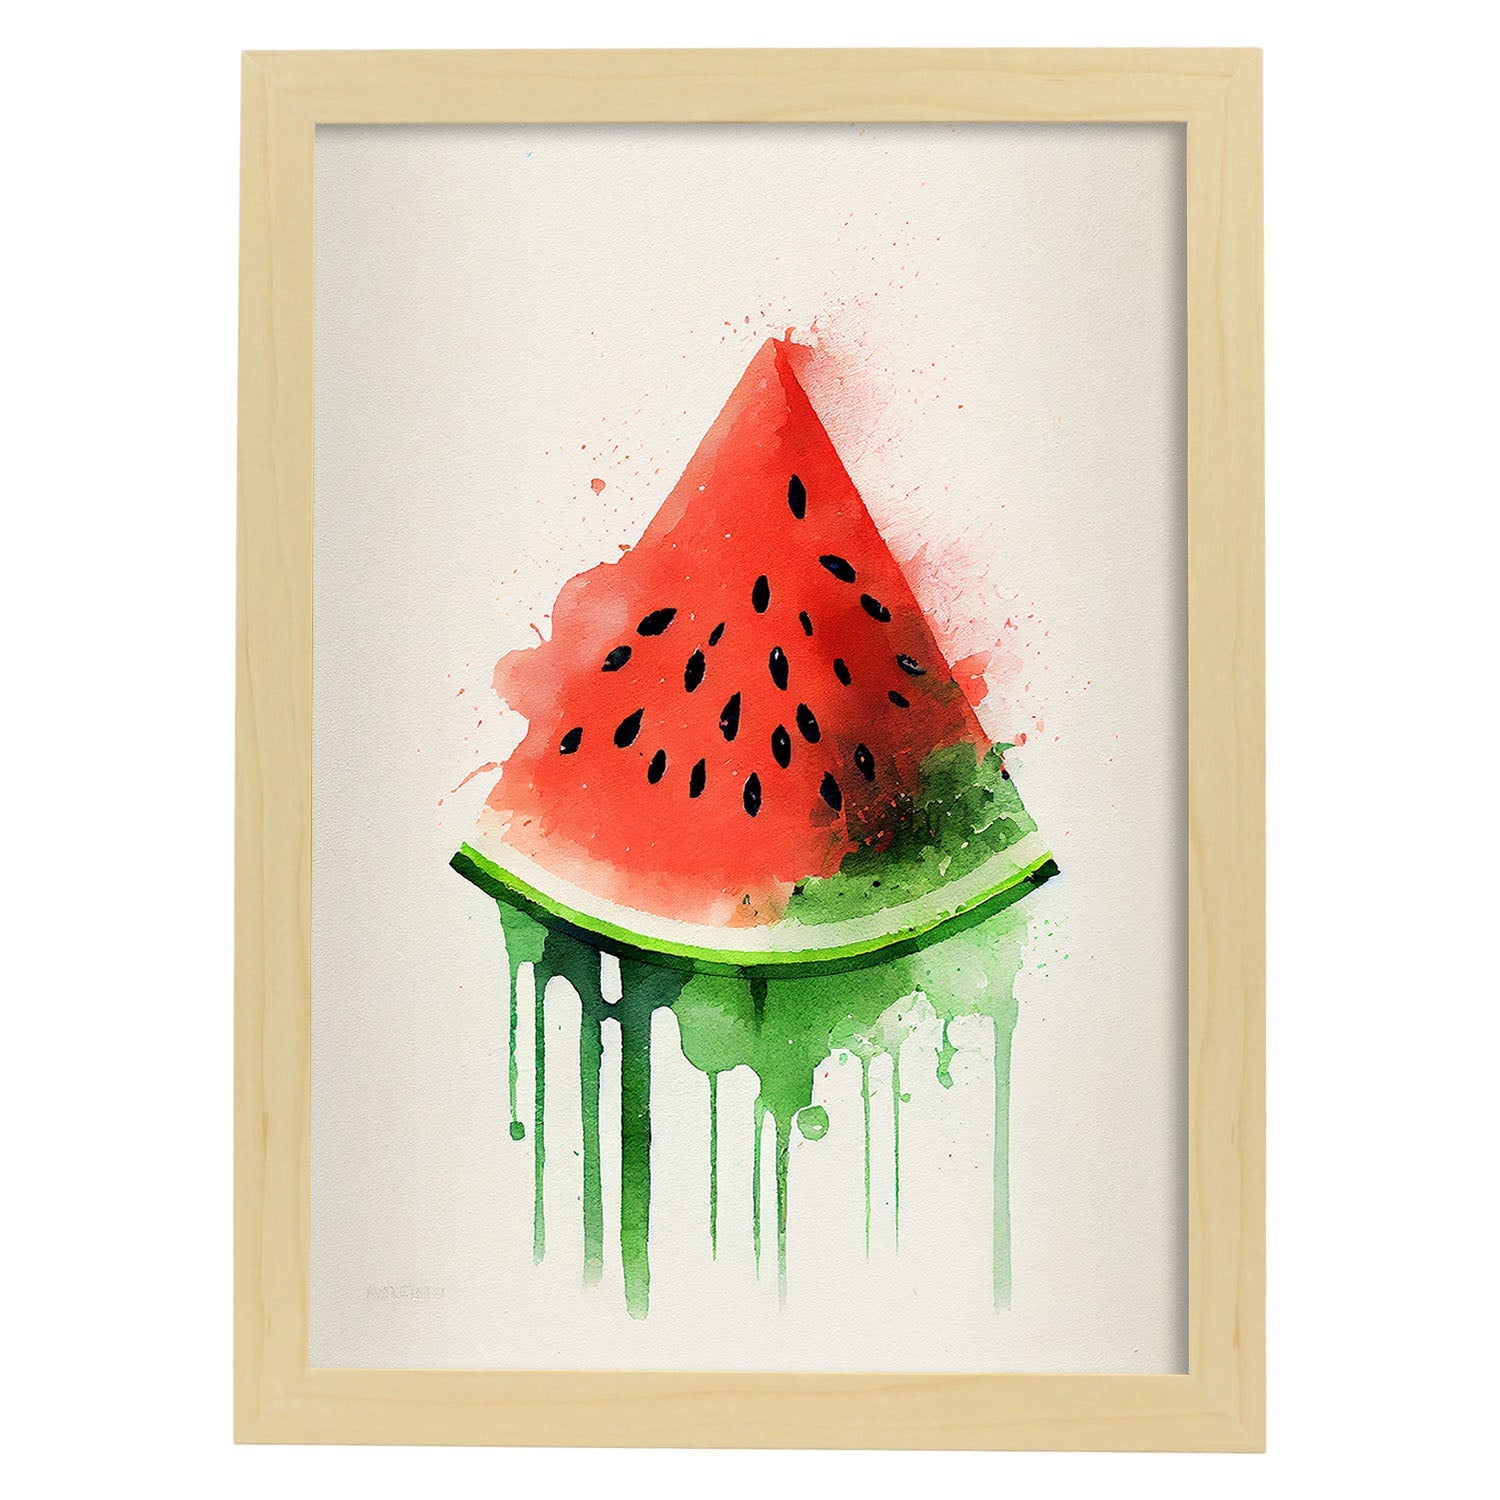 Nacnic minimalist Watermelon_1. Aesthetic Wall Art Prints for Bedroom or Living Room Design.-Artwork-Nacnic-A4-Marco Madera Clara-Nacnic Estudio SL